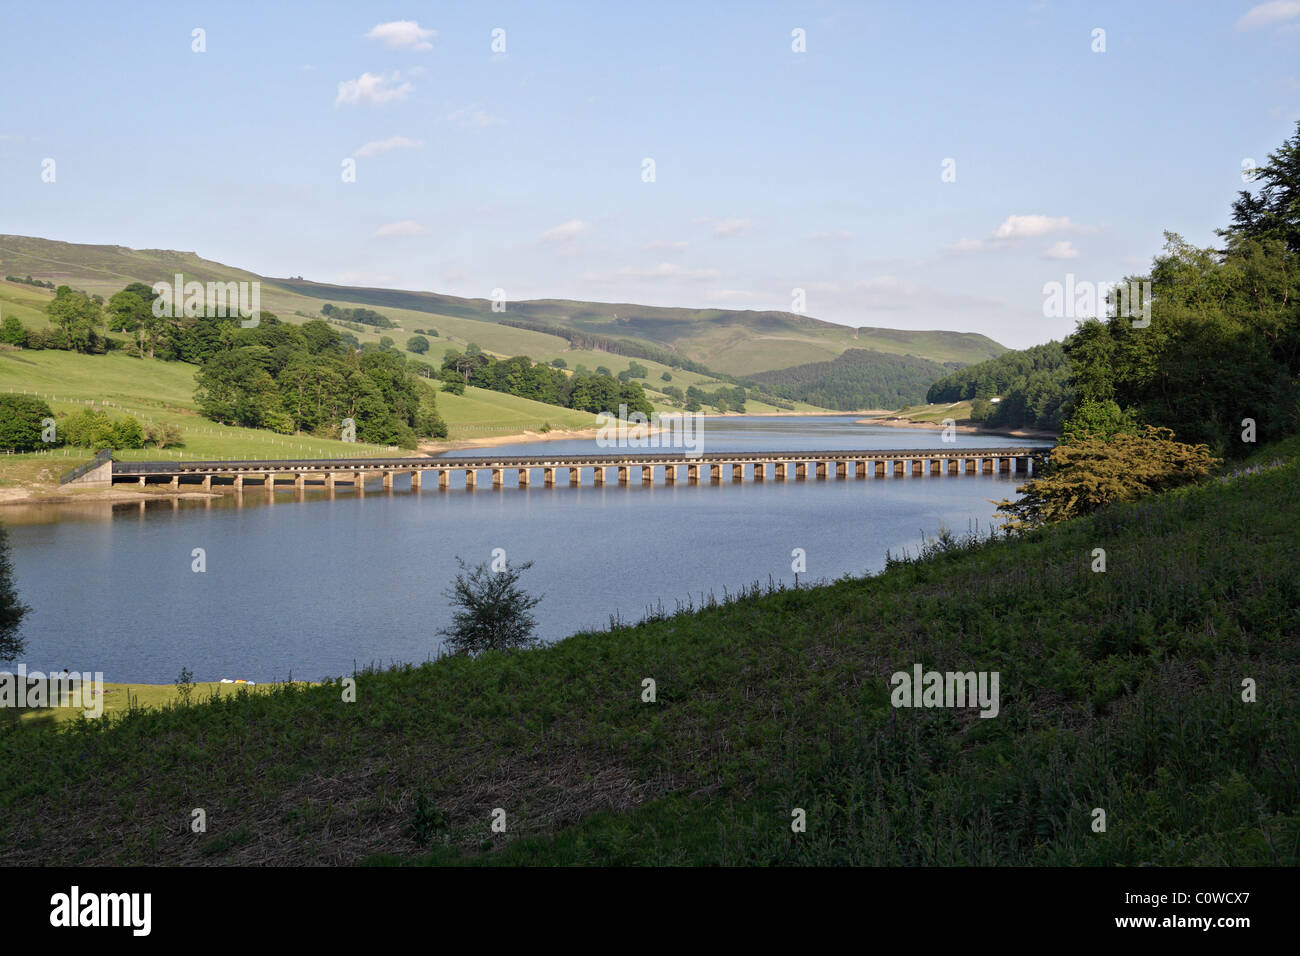 Ladybower Reservoir dam in the Derbyshire Peak District national park England UK Water supply infrastructure Stock Photo